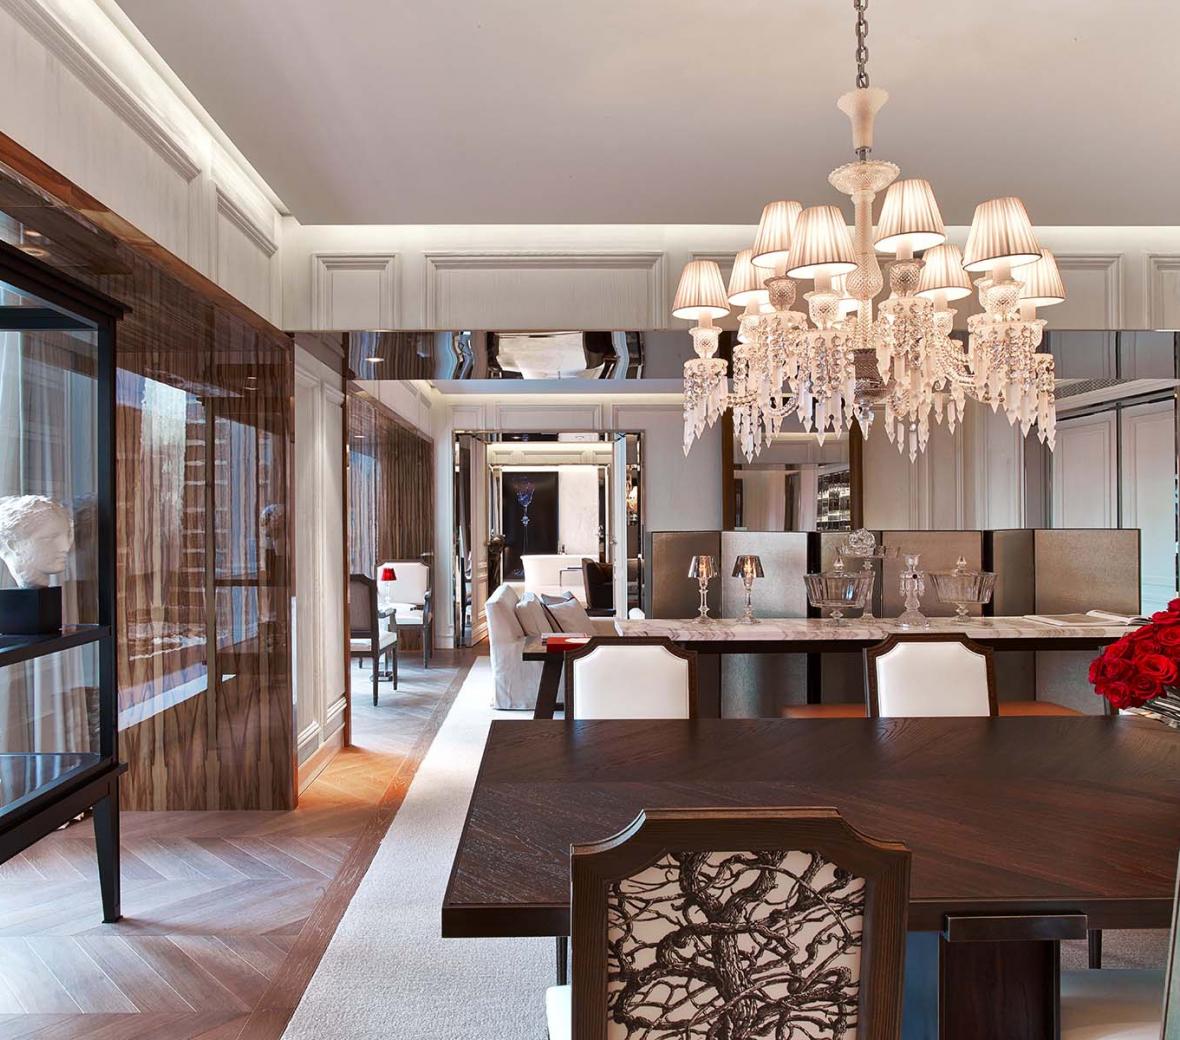 baccarat suite, dining room, chandelier